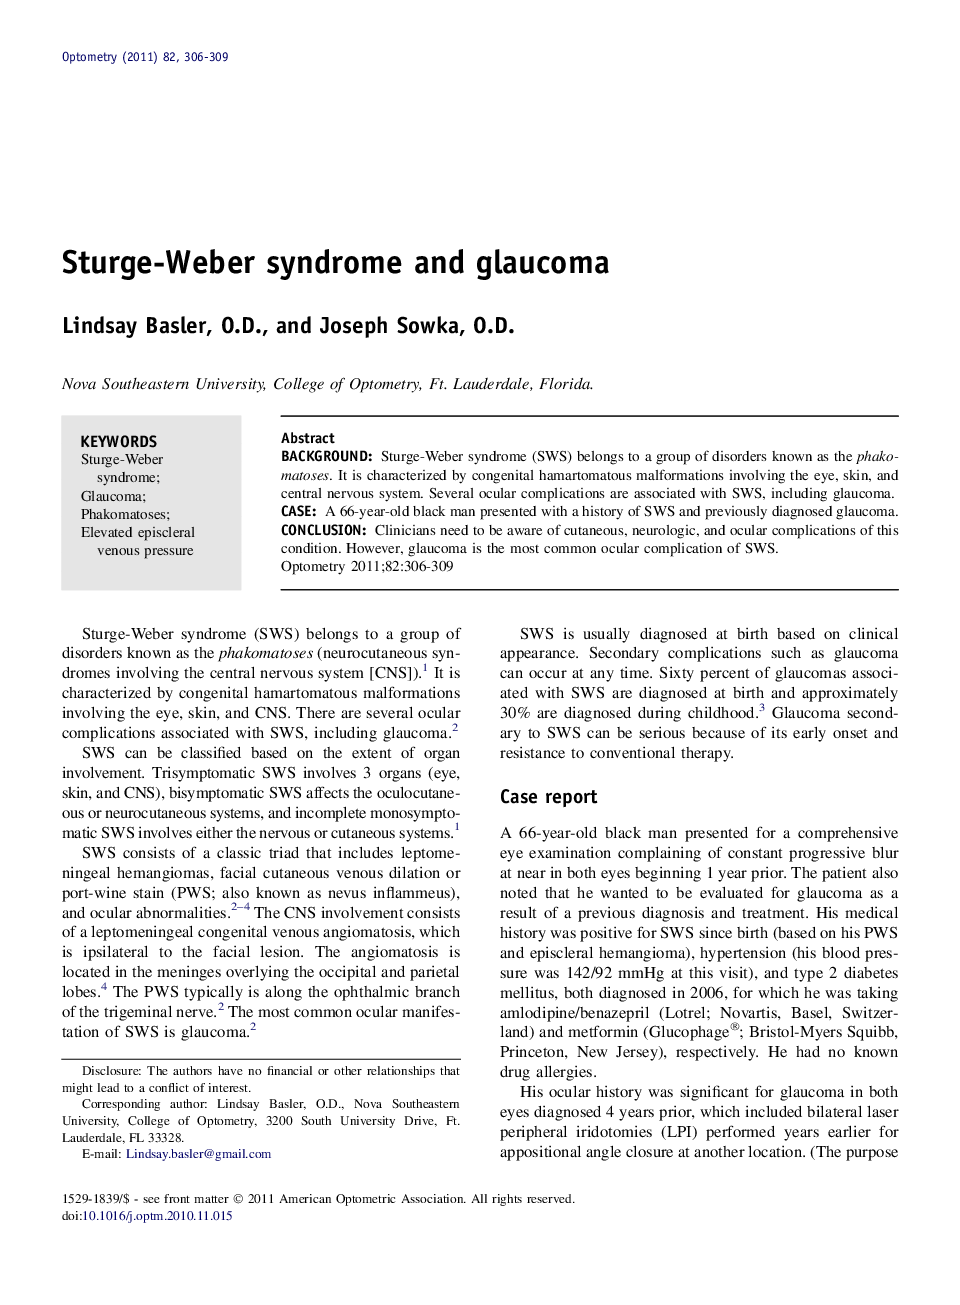 Sturge-Weber syndrome and glaucoma